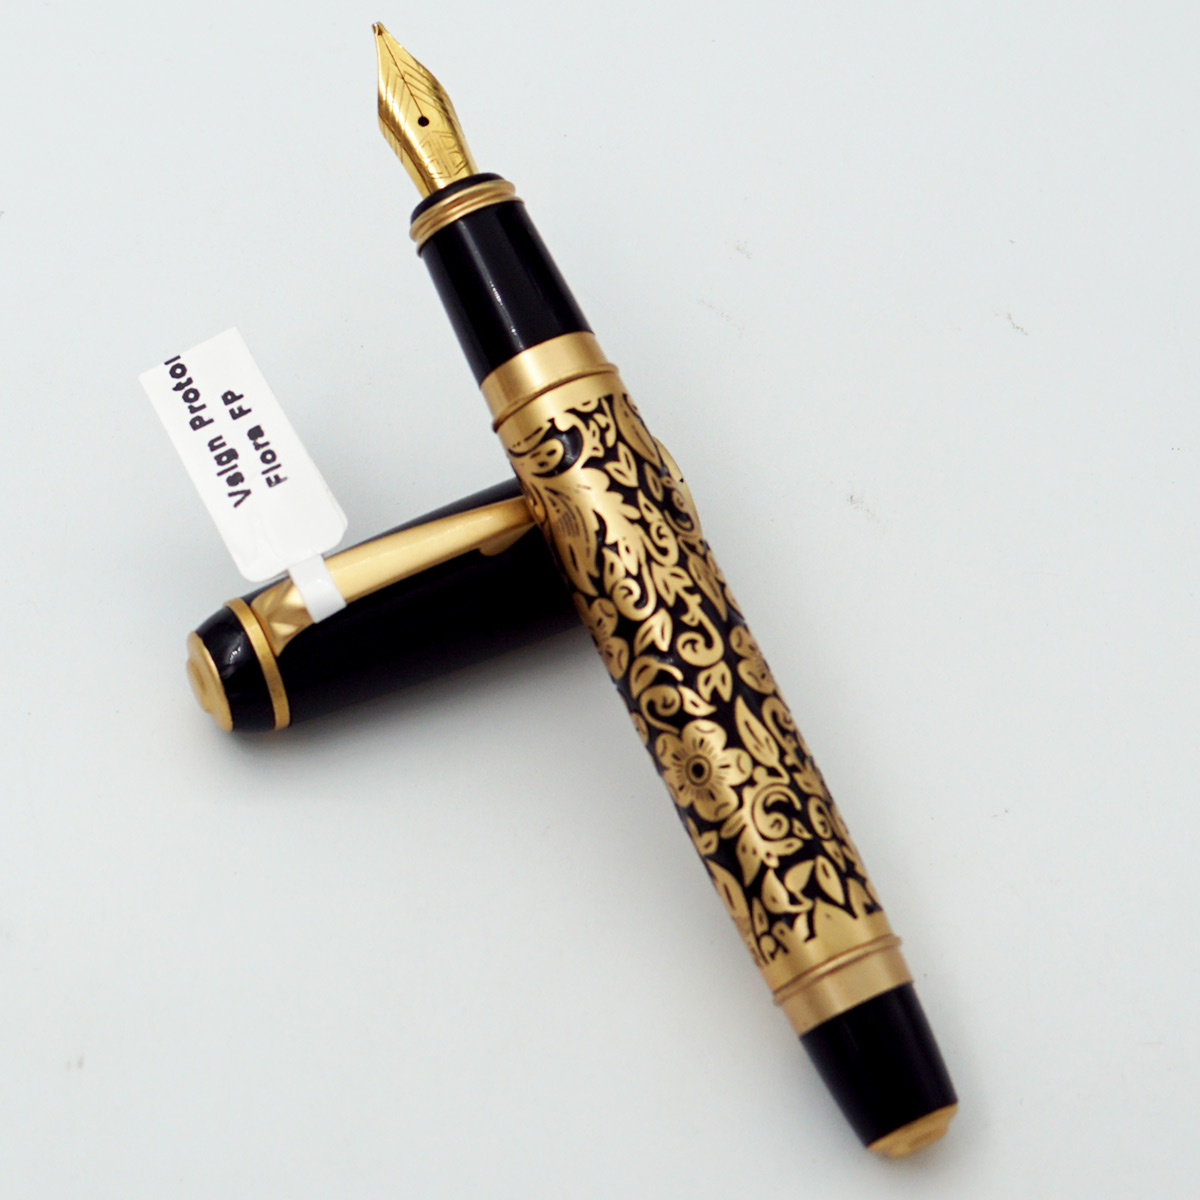 Vsign Proton Flora Golden Color With Flower Design Body And Gold Clip Bold Nib Converter Type Fountain Pen SKU 24444